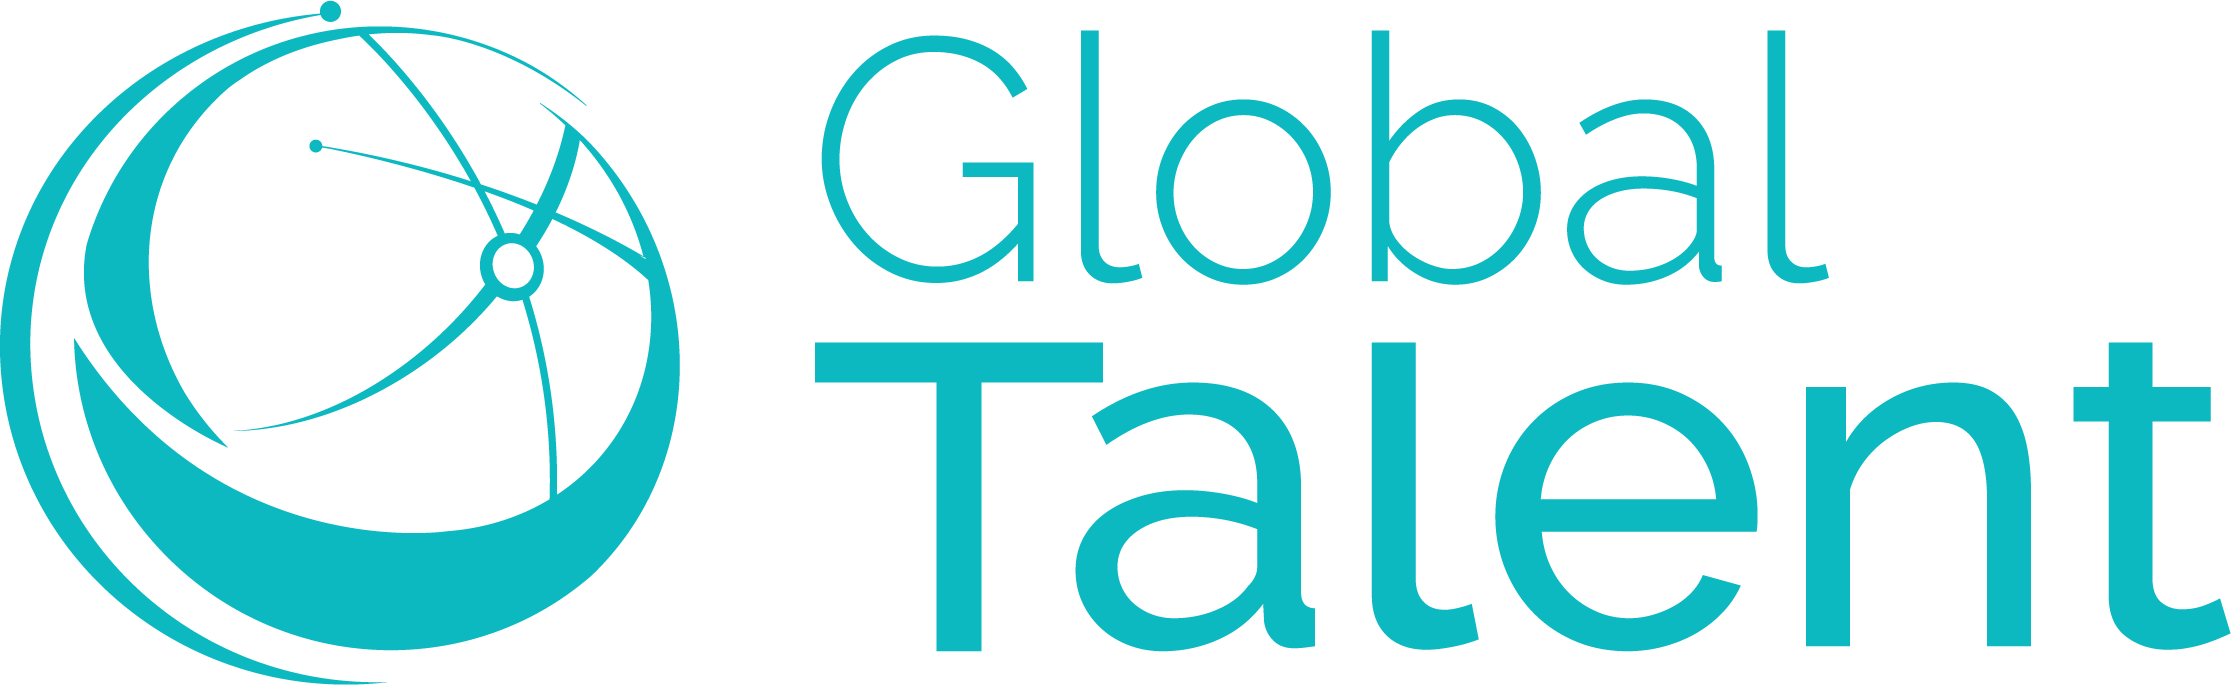 Gt logo